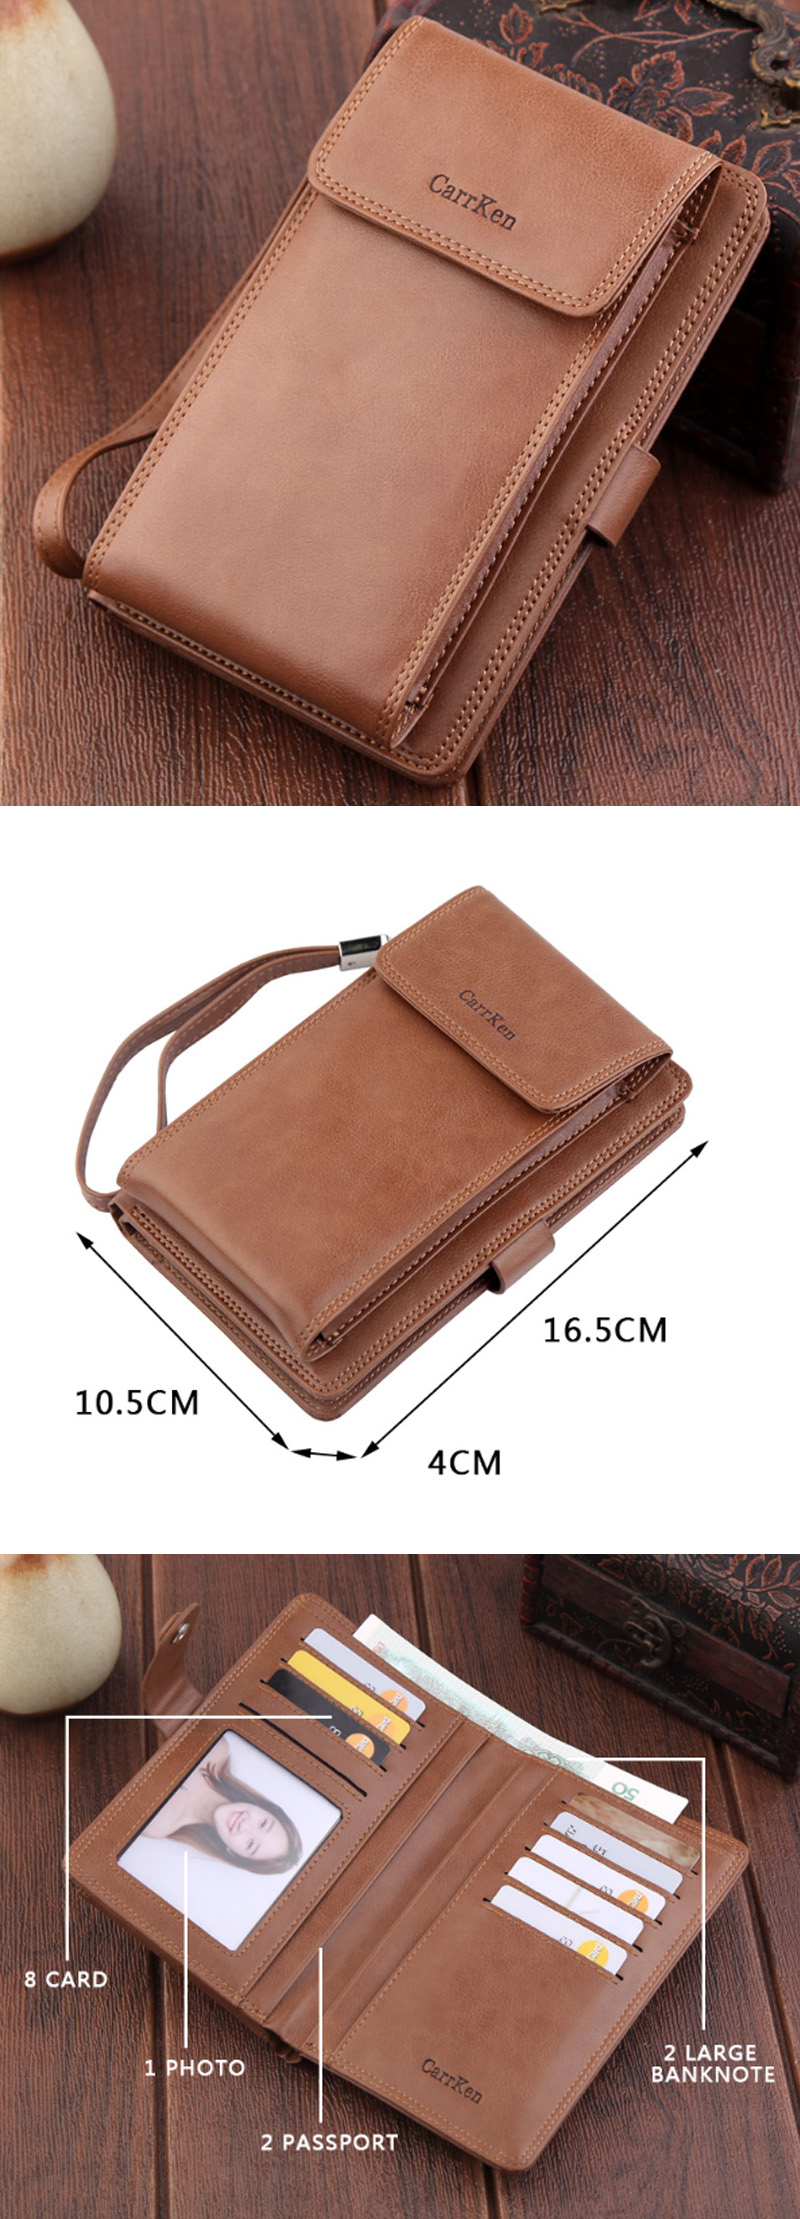 CarrKen-Multifunction-Mens-Handbag-Two-Fold-Wallet-Card-Holder-Coin-Pocket-Passport-Bag-1600986-1